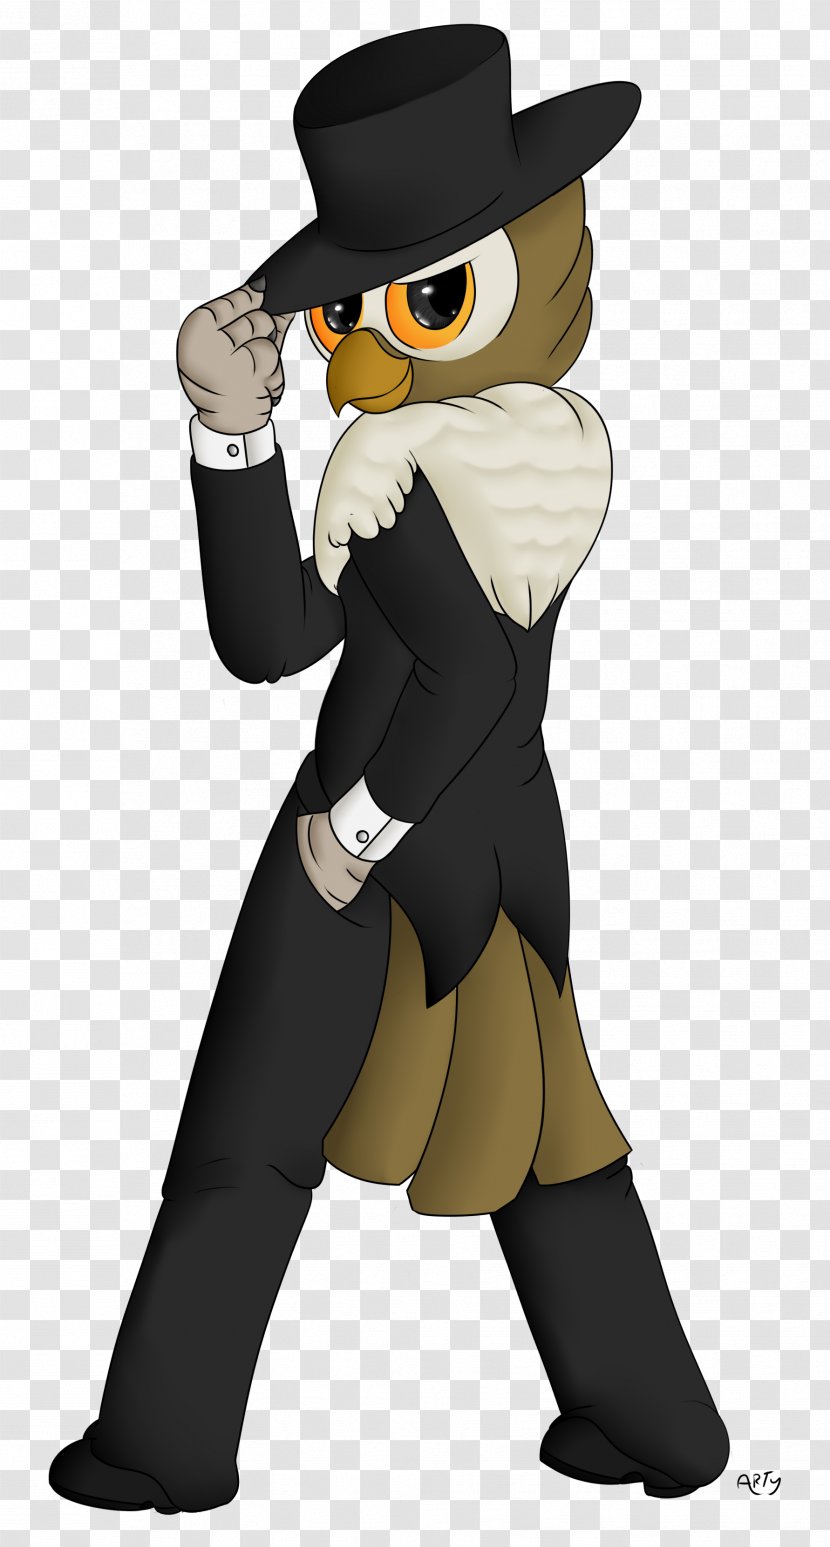 Flightless Bird Illustration Mascot Character Transparent PNG